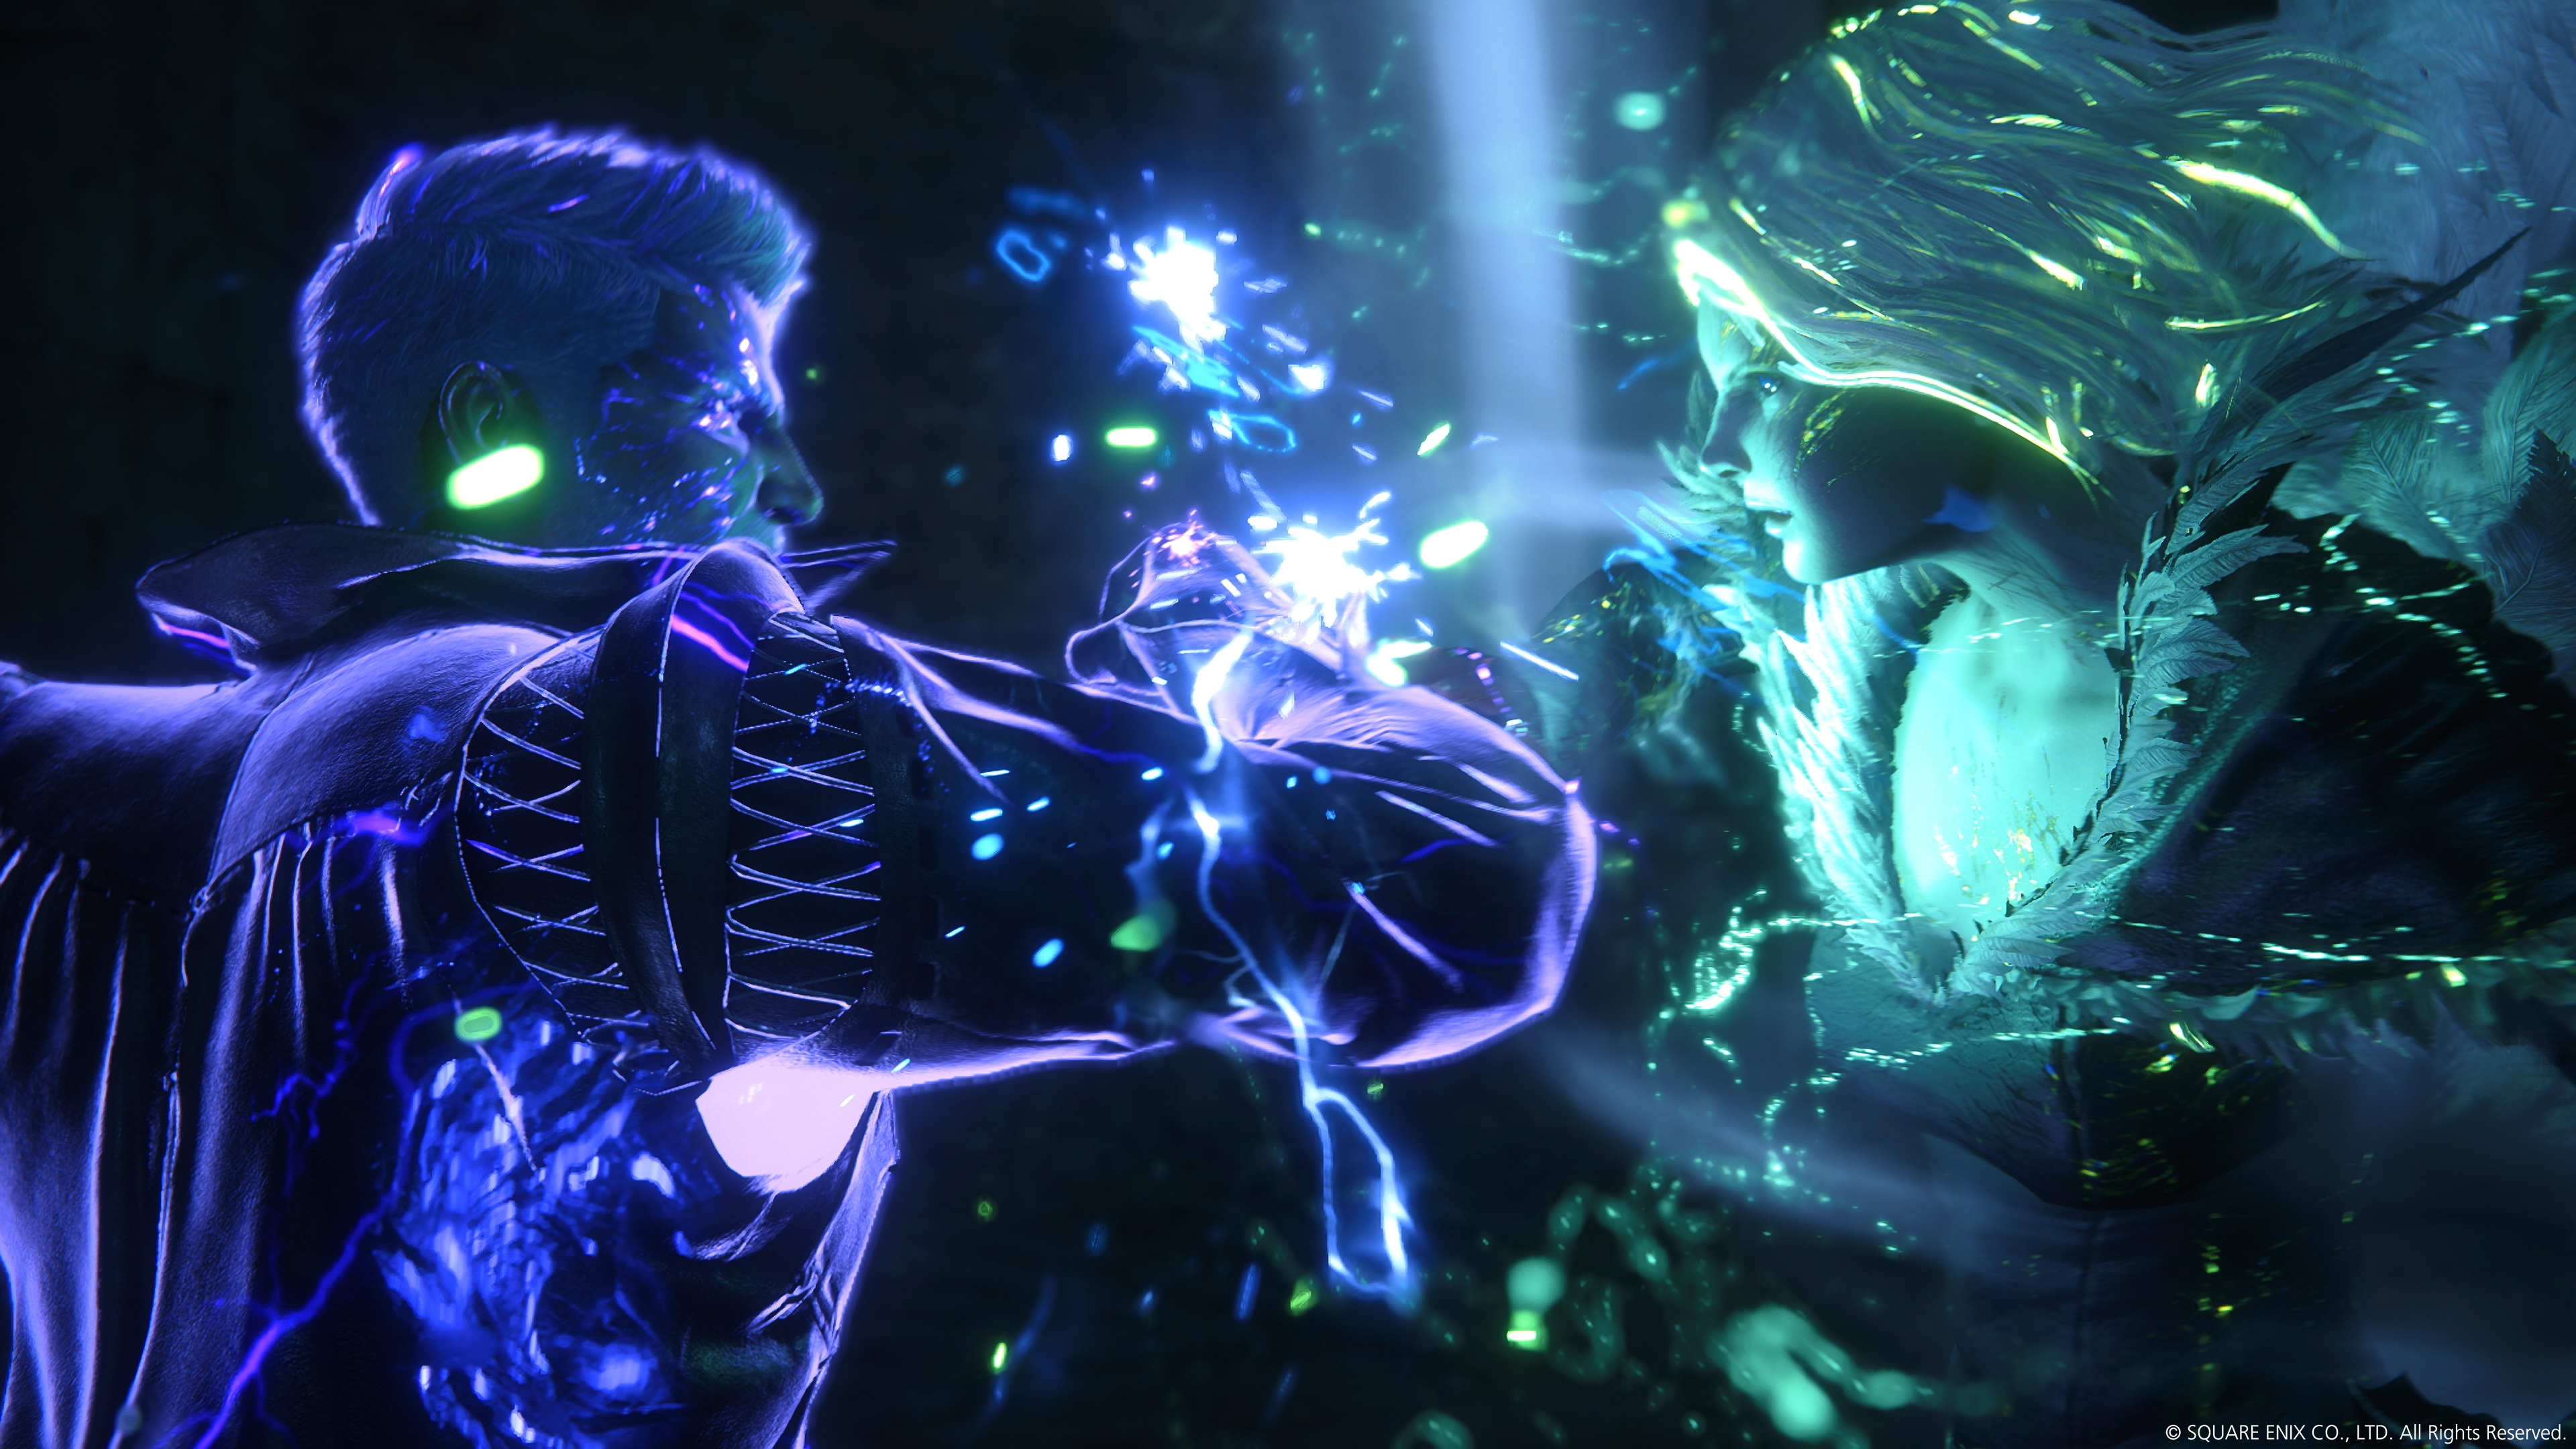 Review: 'Final Fantasy XVI' offers rich fantasy alongside deep character  development